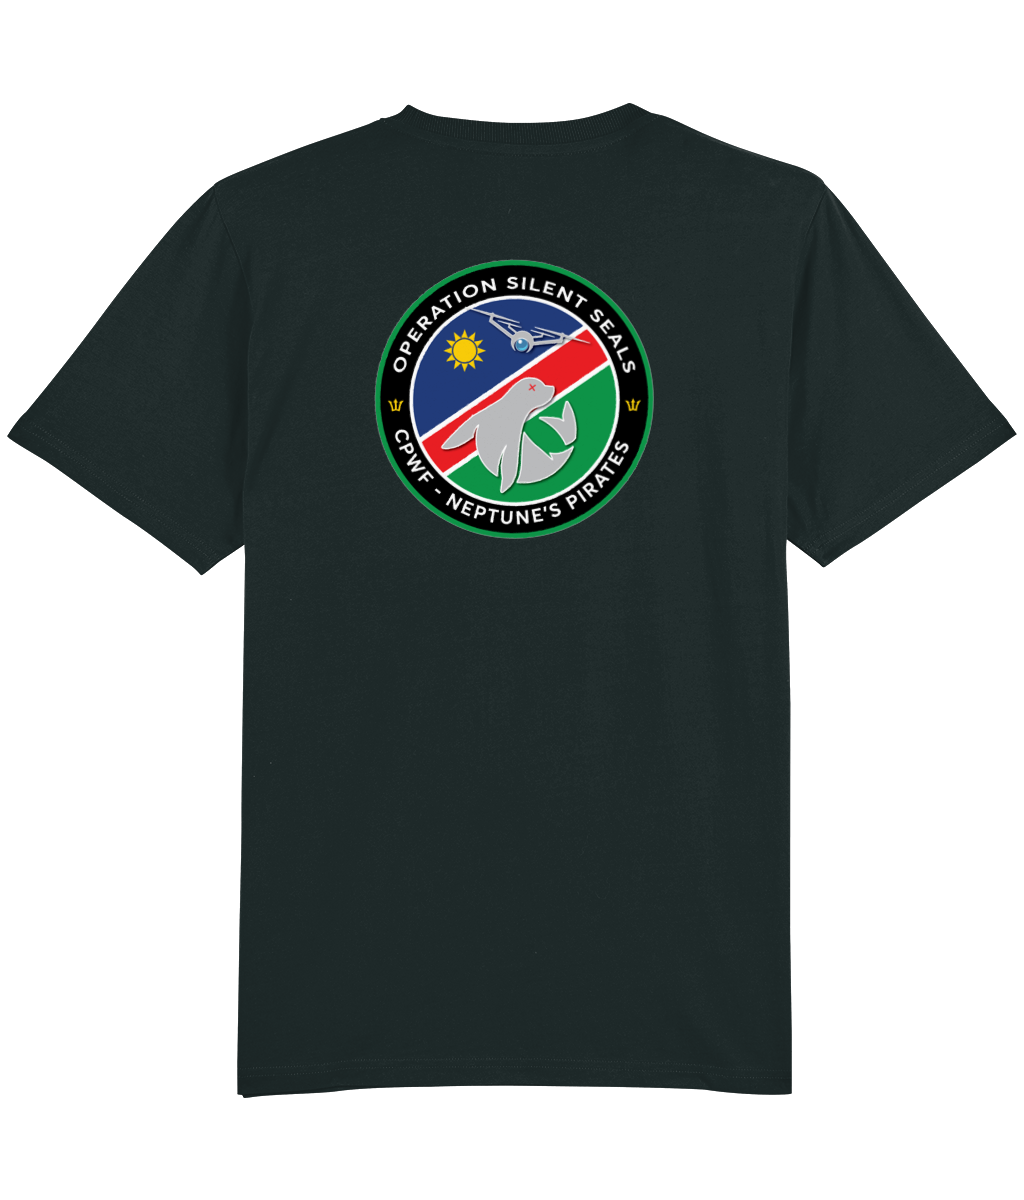 Operation Silent Seals Heavy Unisex T-Shirt - Captain Paul Watson Foundation (t/a Neptune's Pirates)